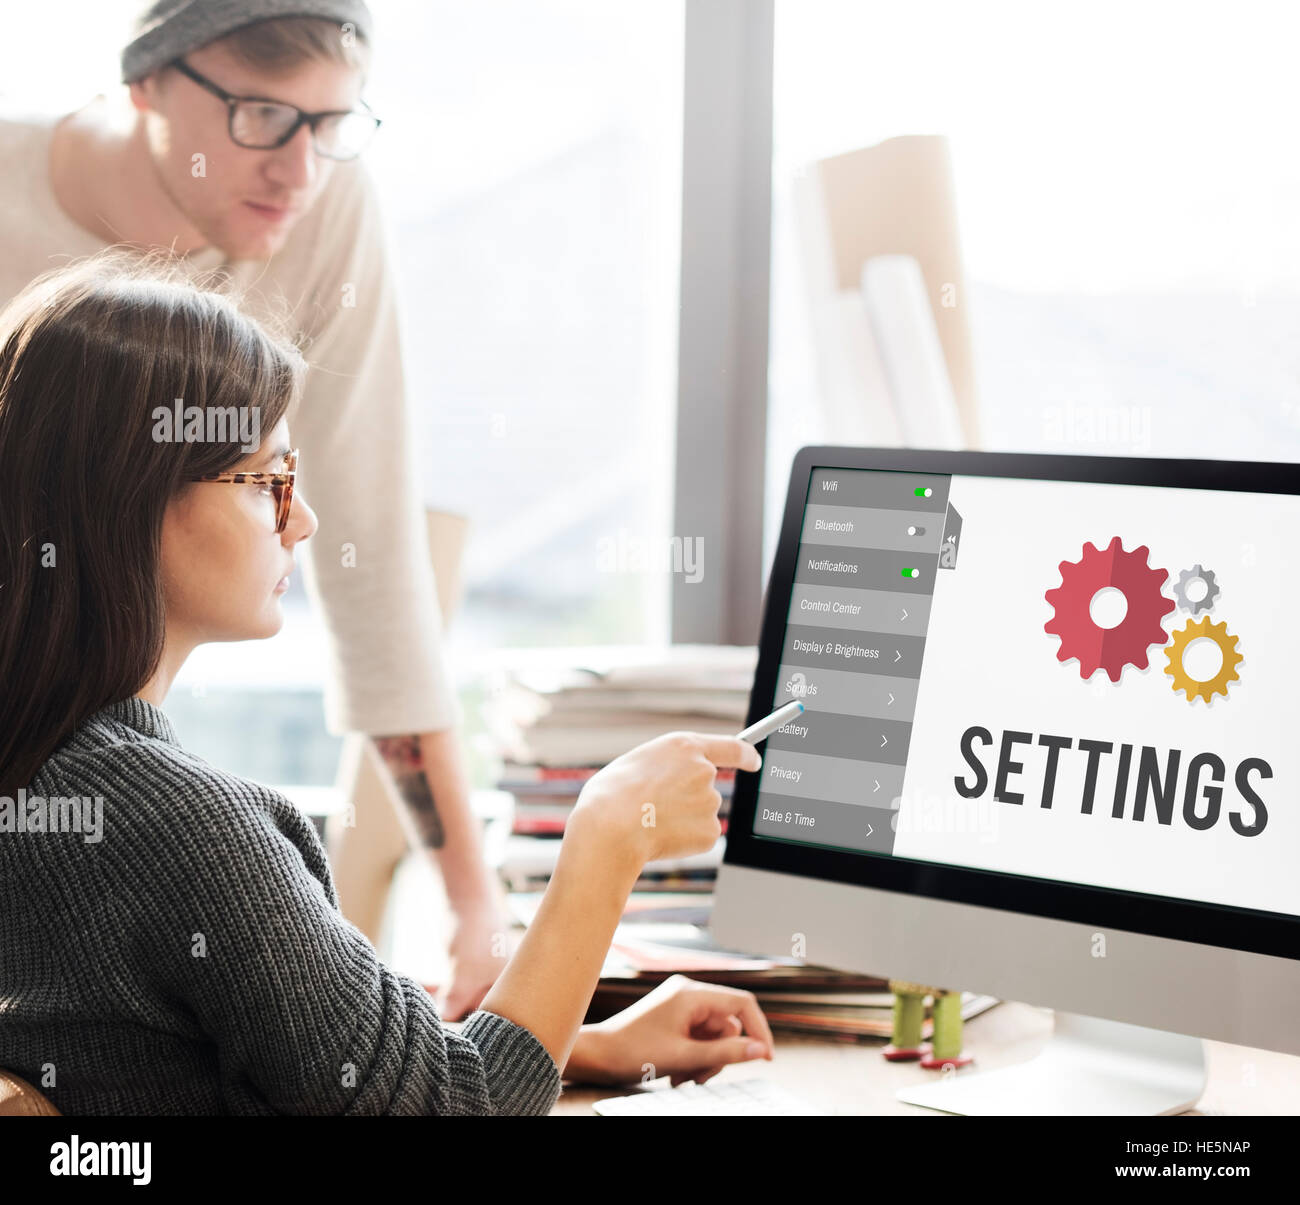 Settings Configuration Setup Tools Concept Stock Photo